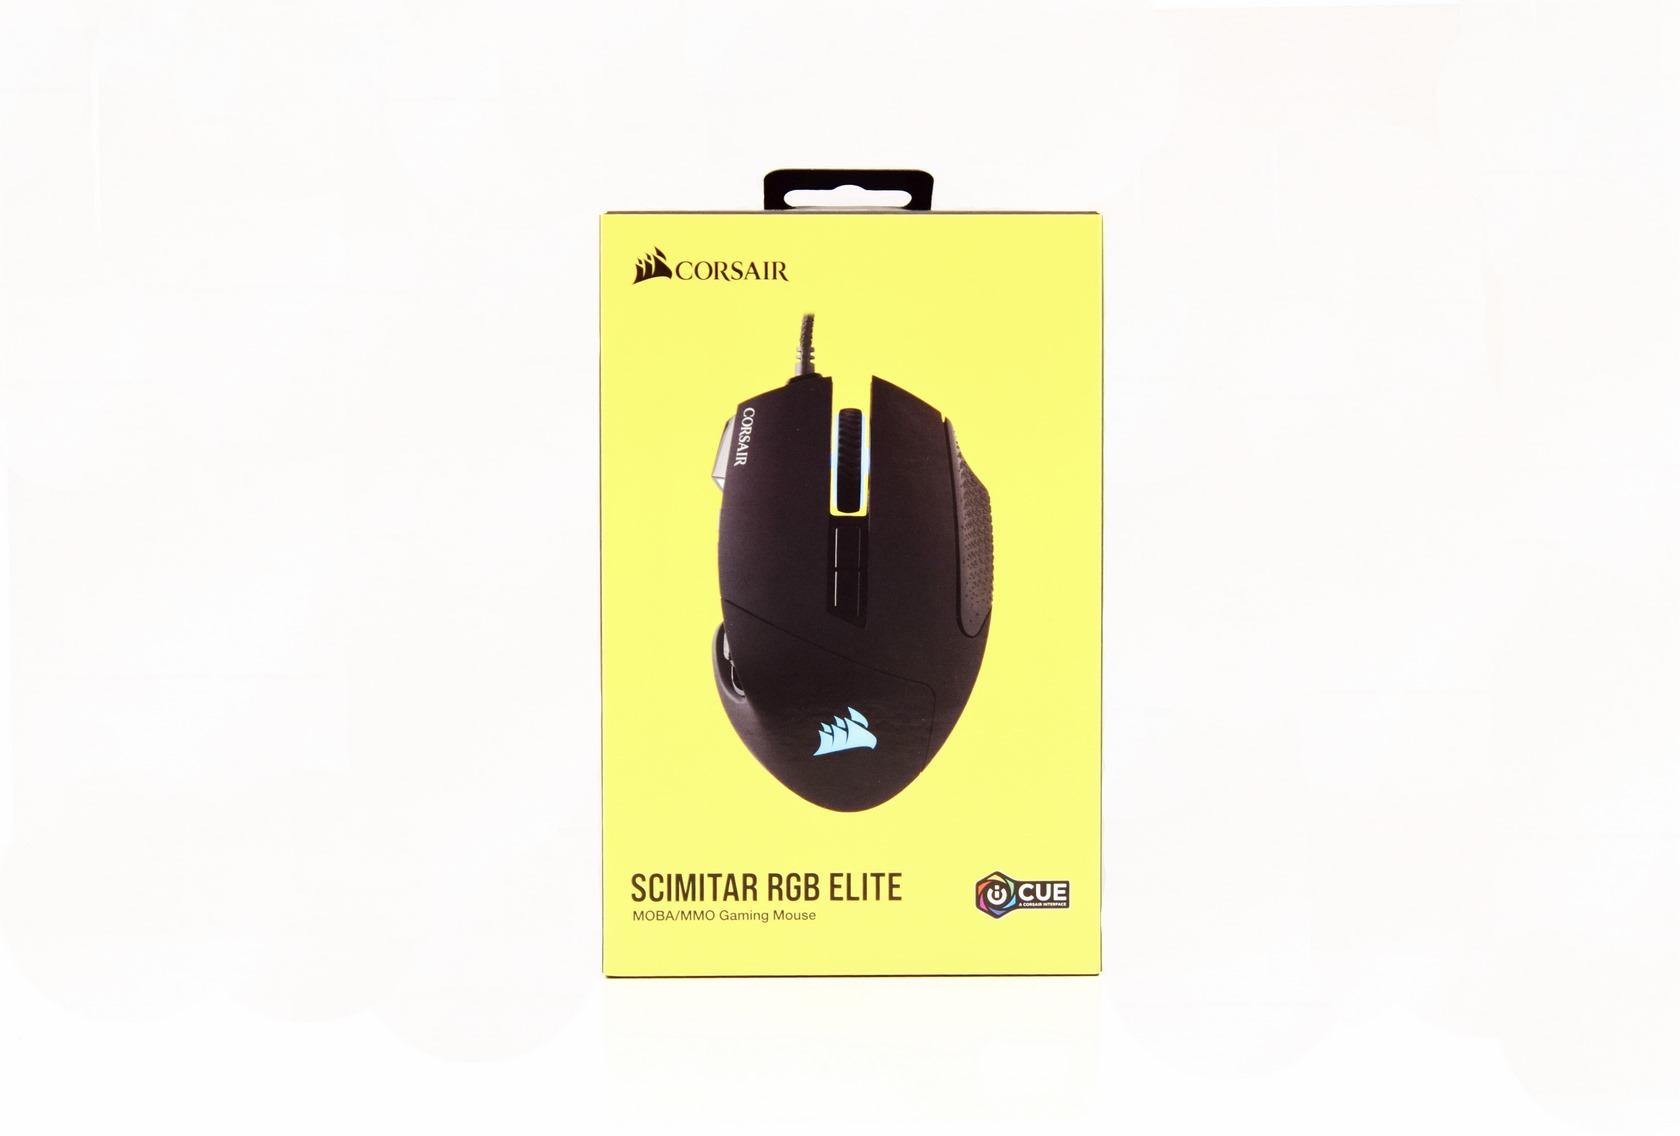 CORSAIR Scimitar RGB Elite Review MOBA/MMO Gaming Mouse